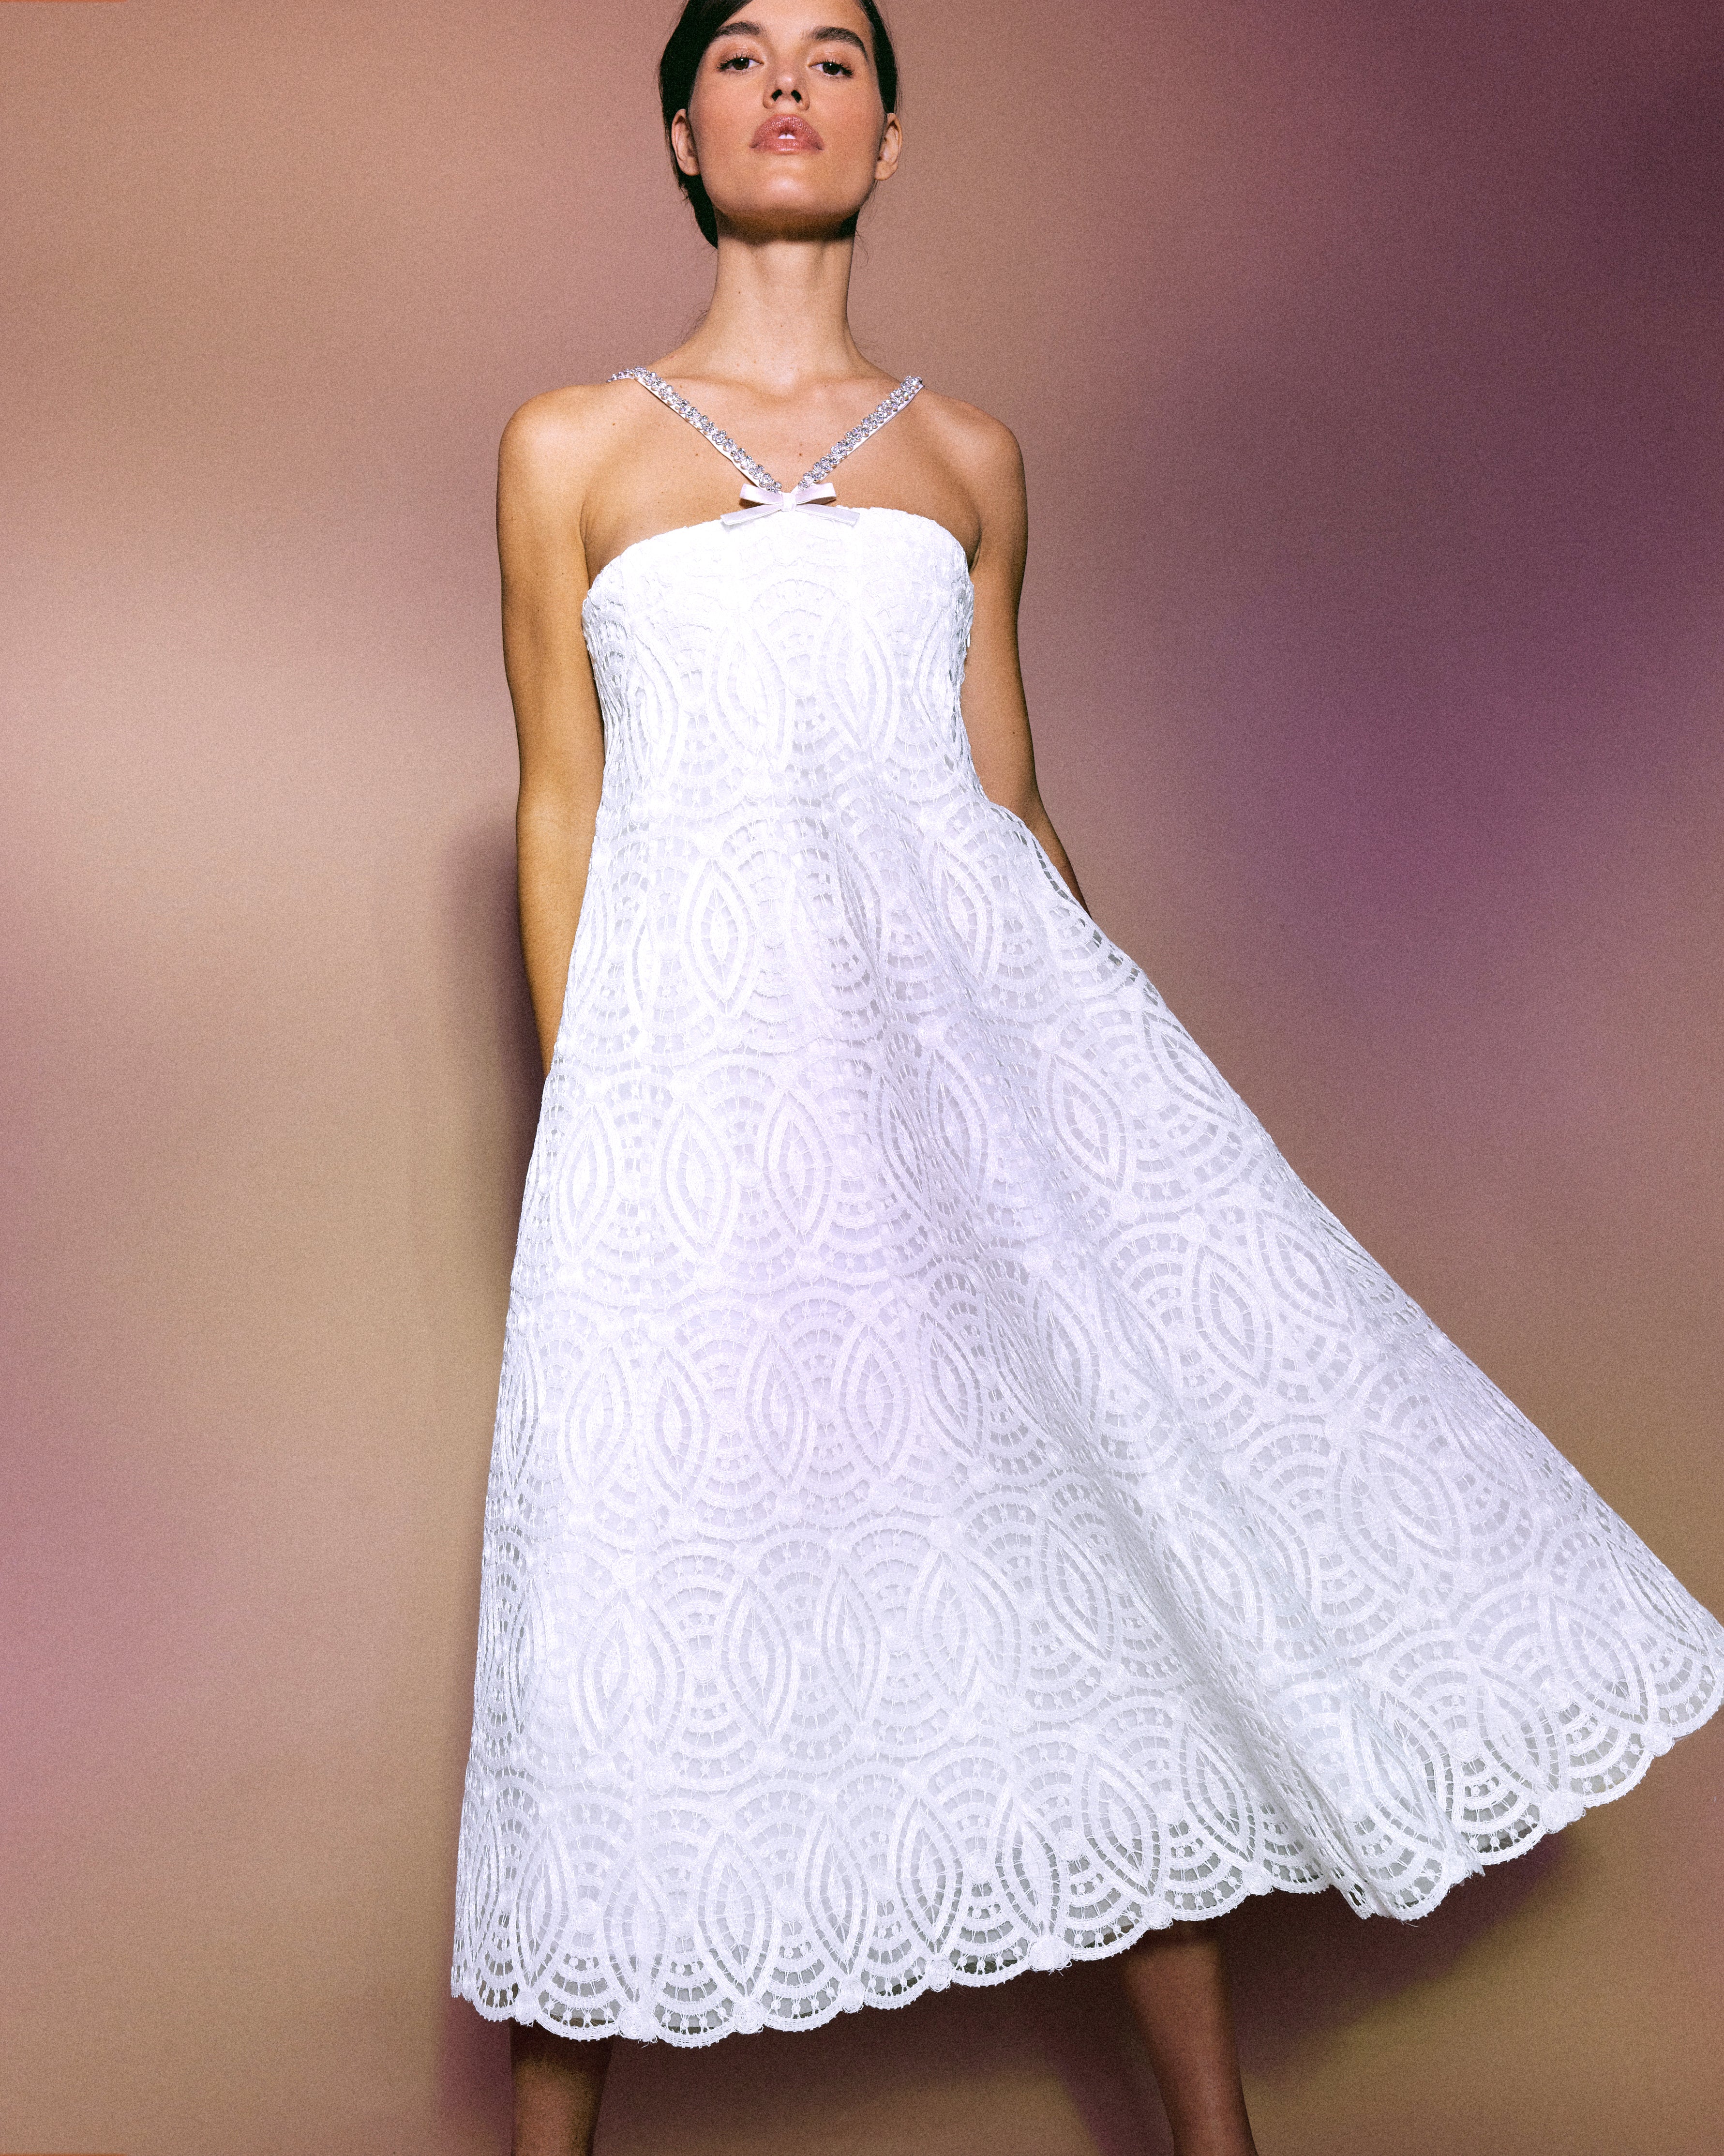 Mina Dress in Ivory Raffia Lace